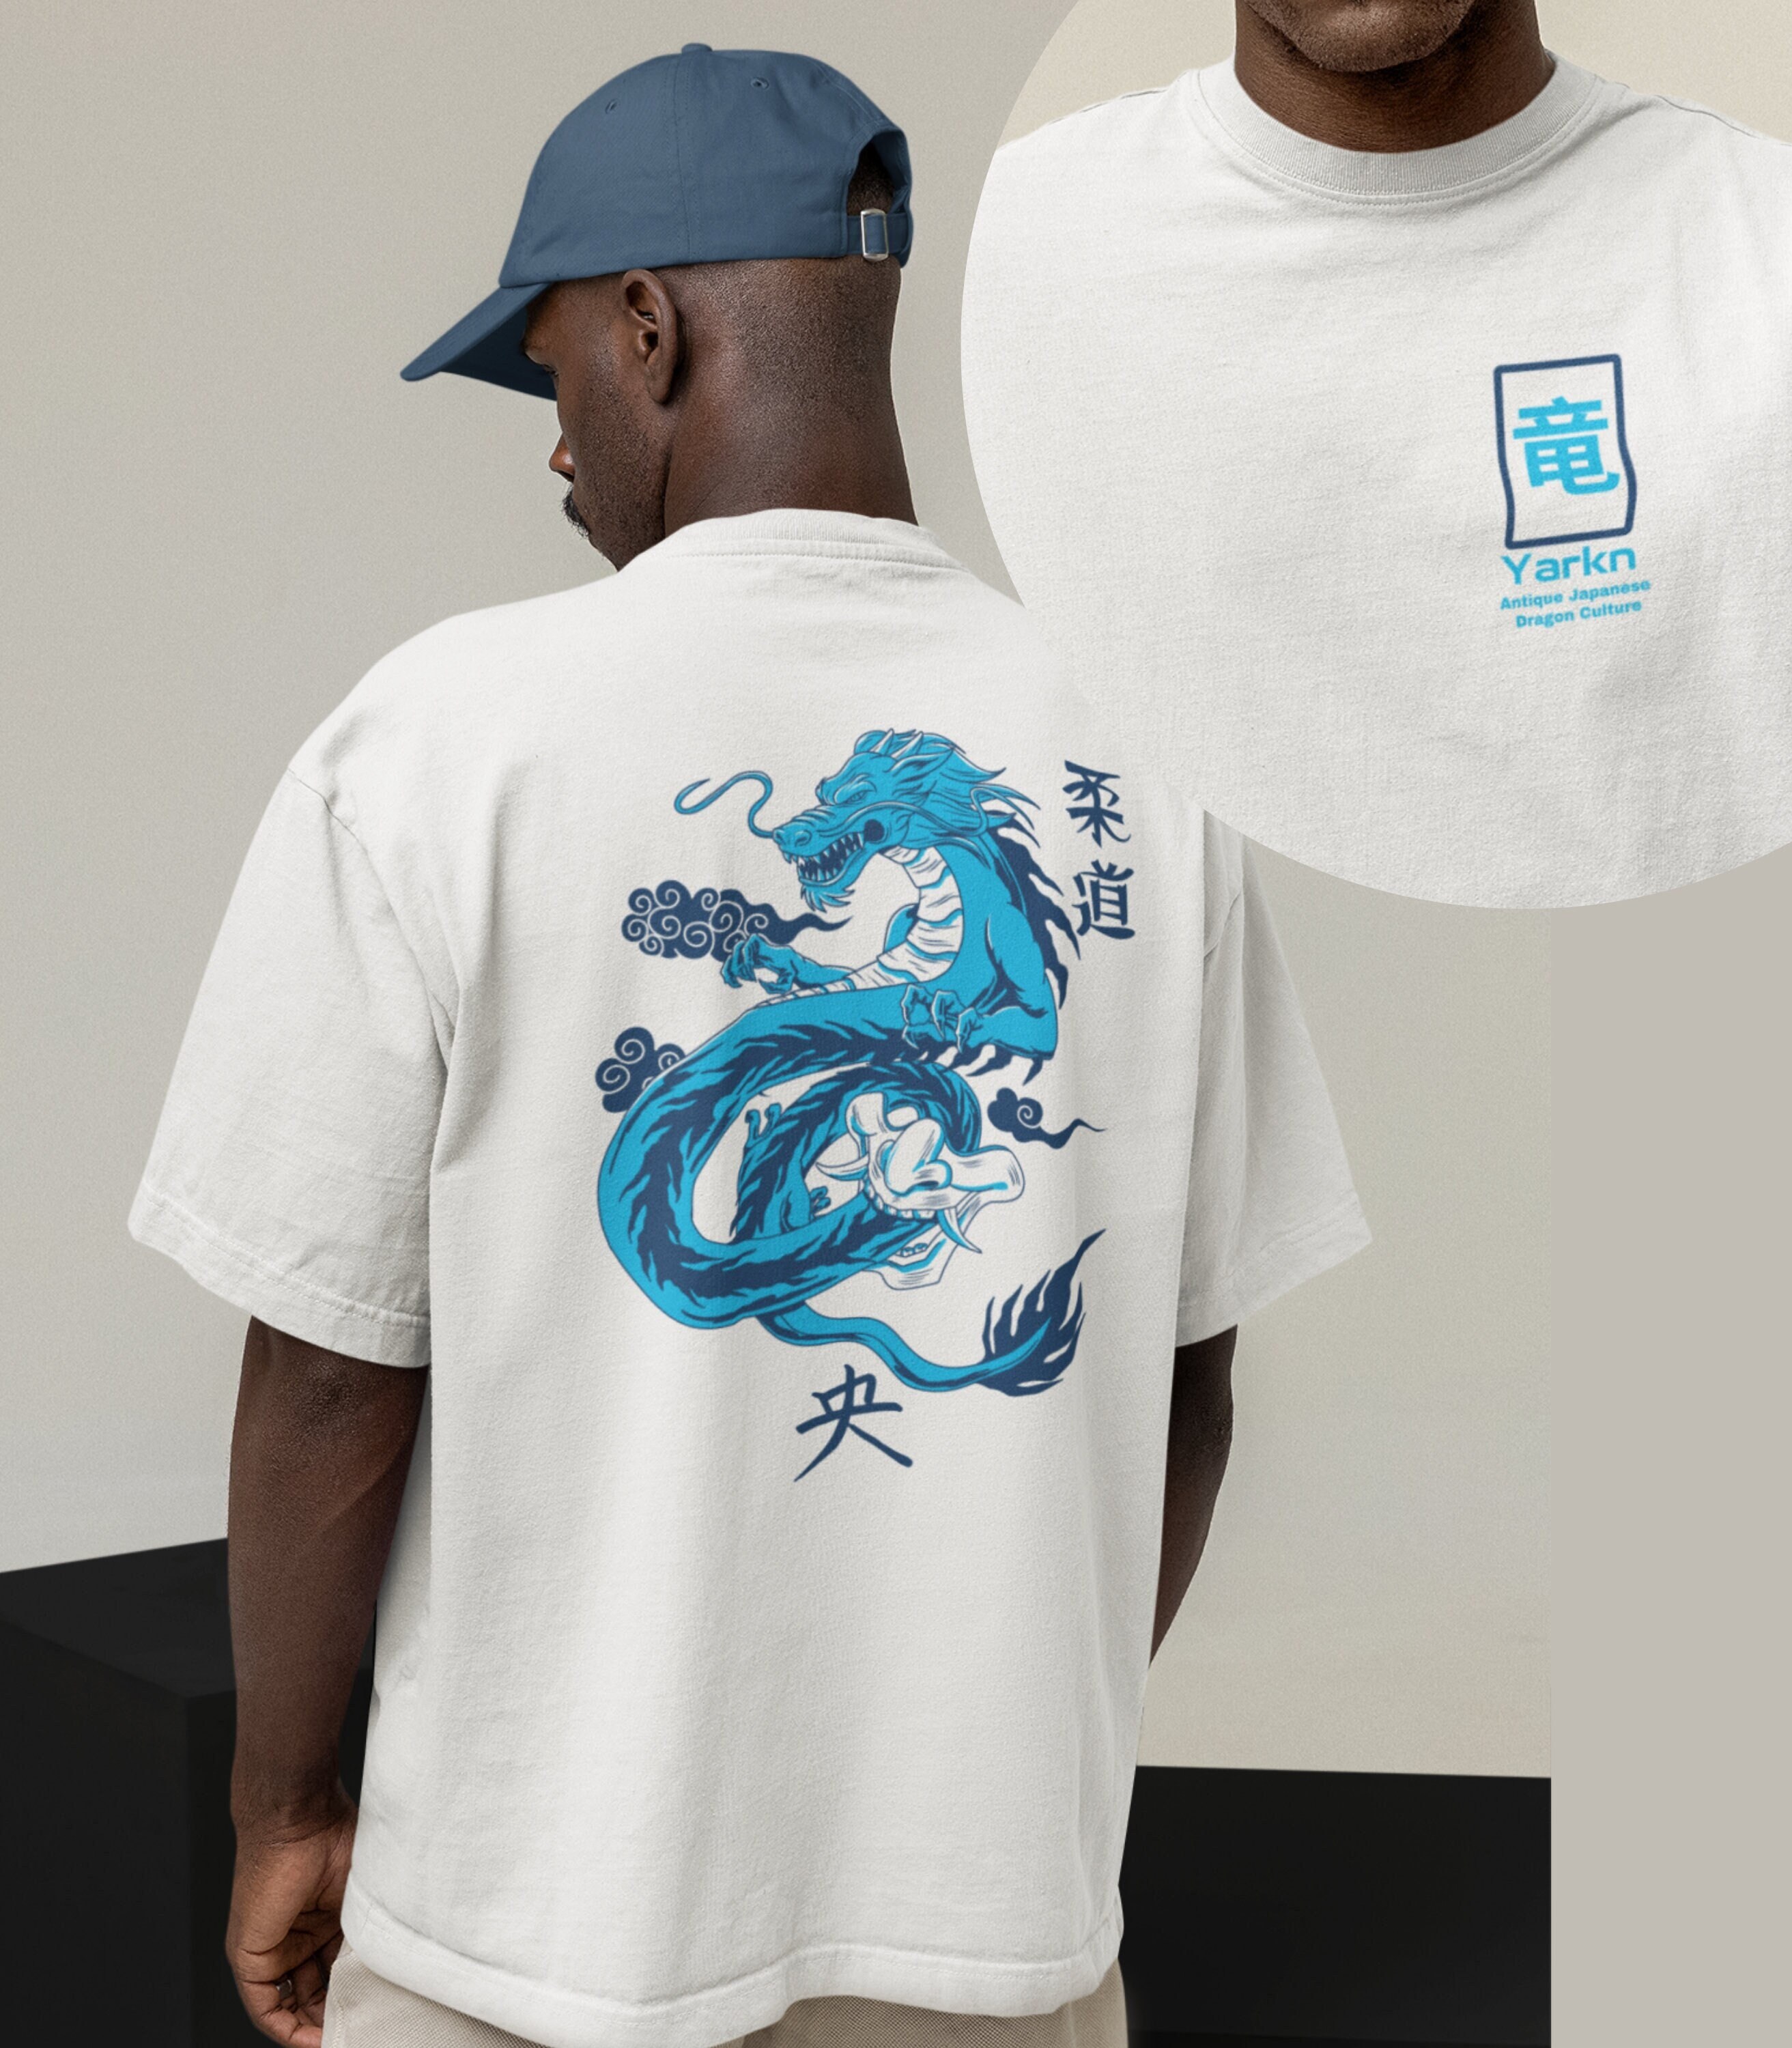 CHINESE DRAGON TEE! 🐉Available NOW🐉 Link in bio . . . #shirt #tee #tshirt  #tshirtdesign #clothingbrand #clothing #chinesedragon